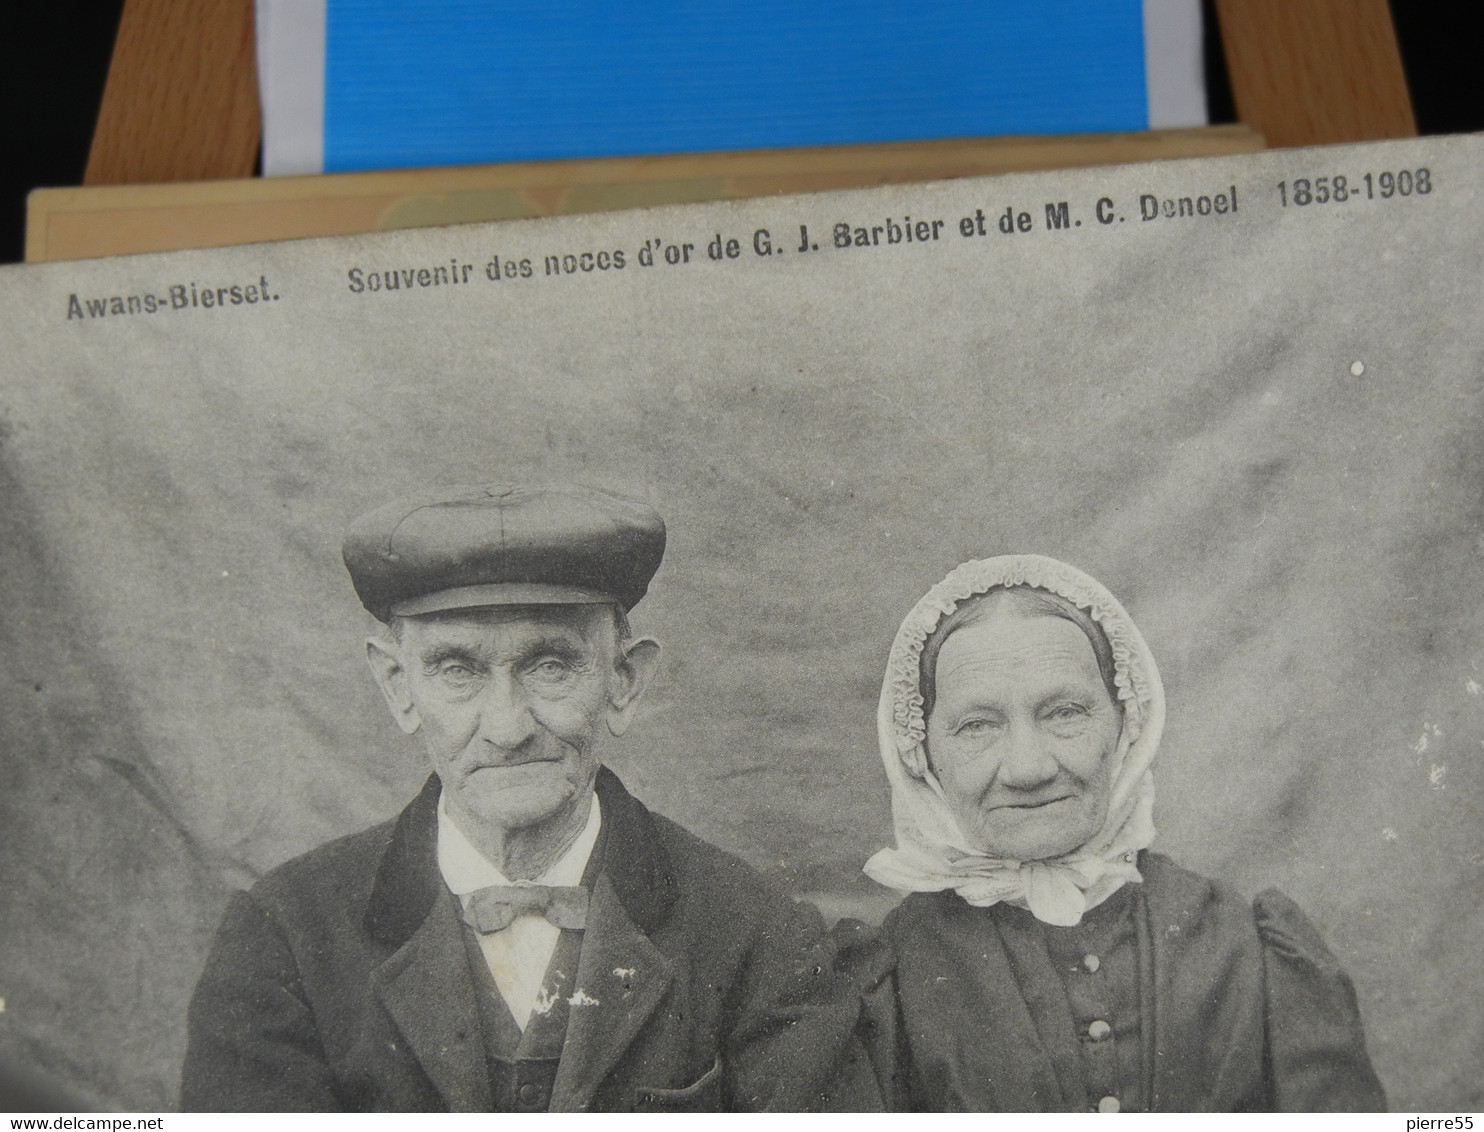 AWANS-BIERSET - SOUVENIR DES NOCES D'OR DE GJ BARBIER & MC DENOEL 1858-1908- NON-ENVOYEE - TBE - Awans